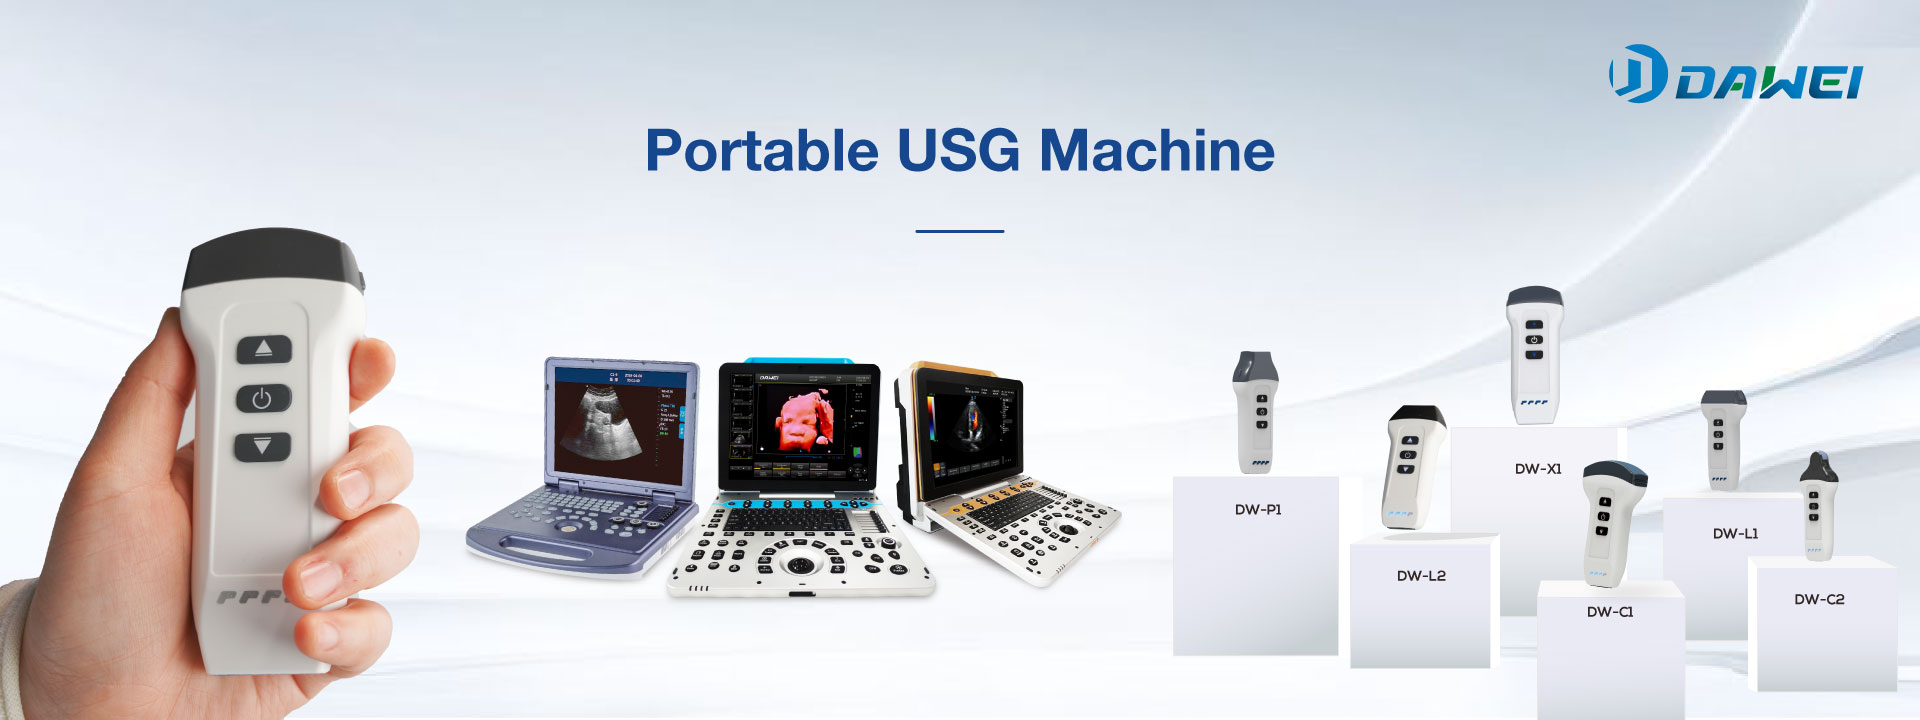 https://www.ultrasounddawei.com/news/affordable-portable-usg-machines/